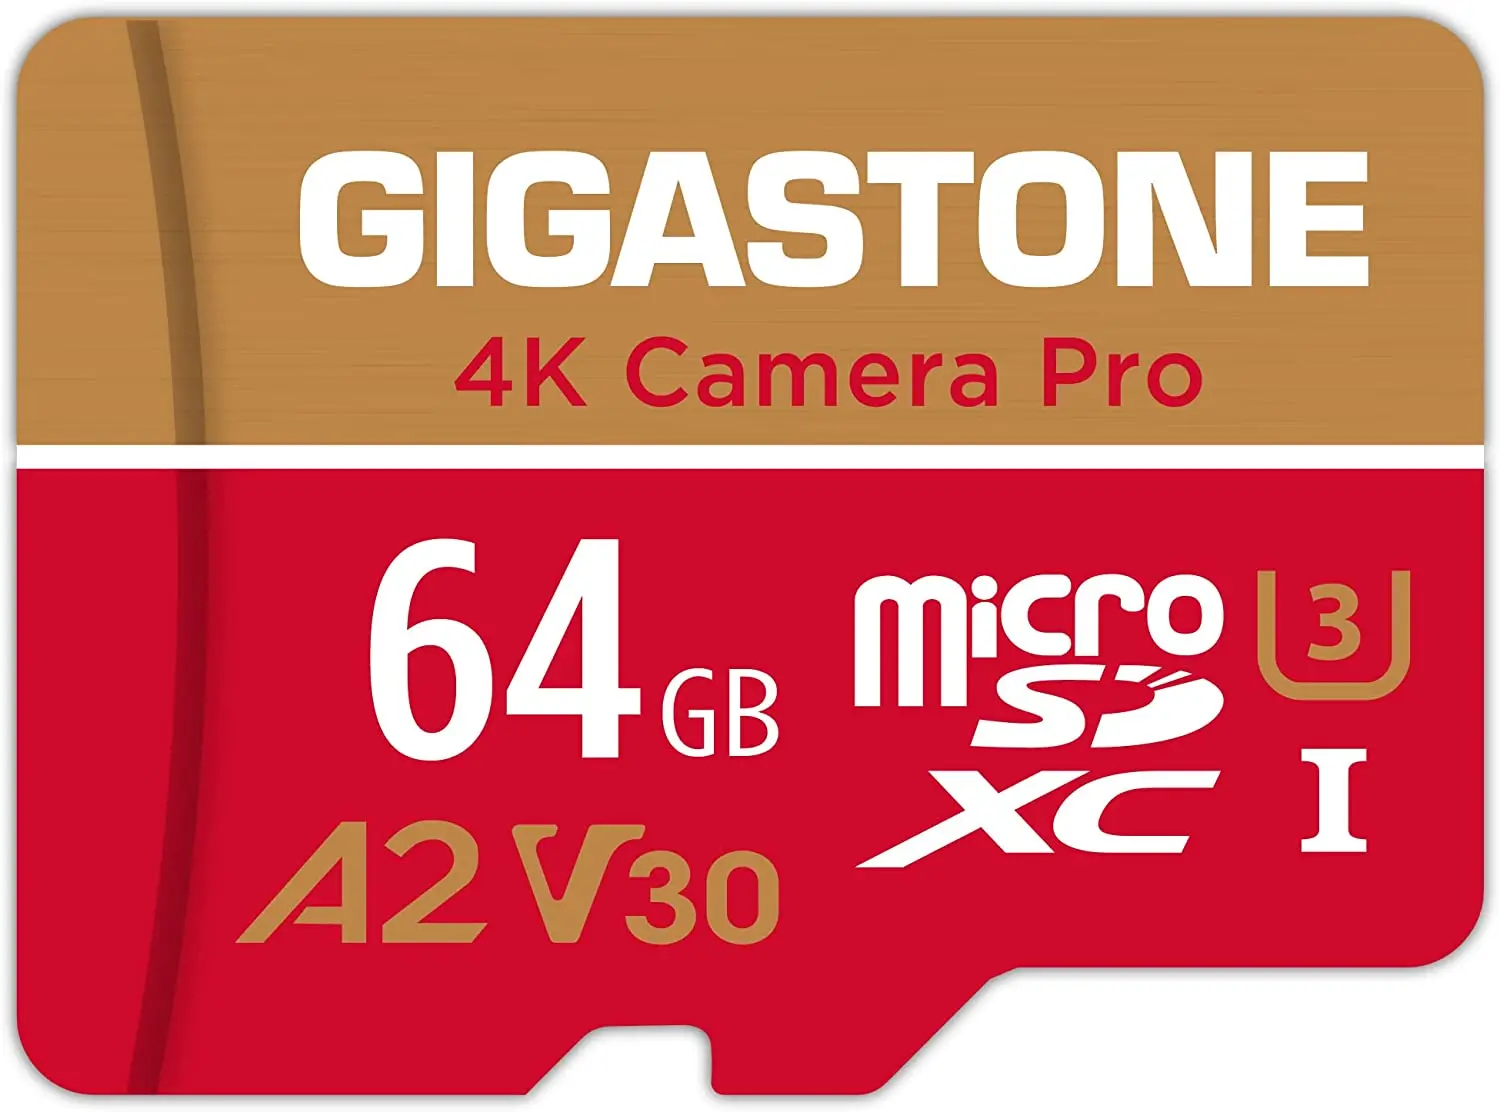 Gigastone 4K Camera Pro